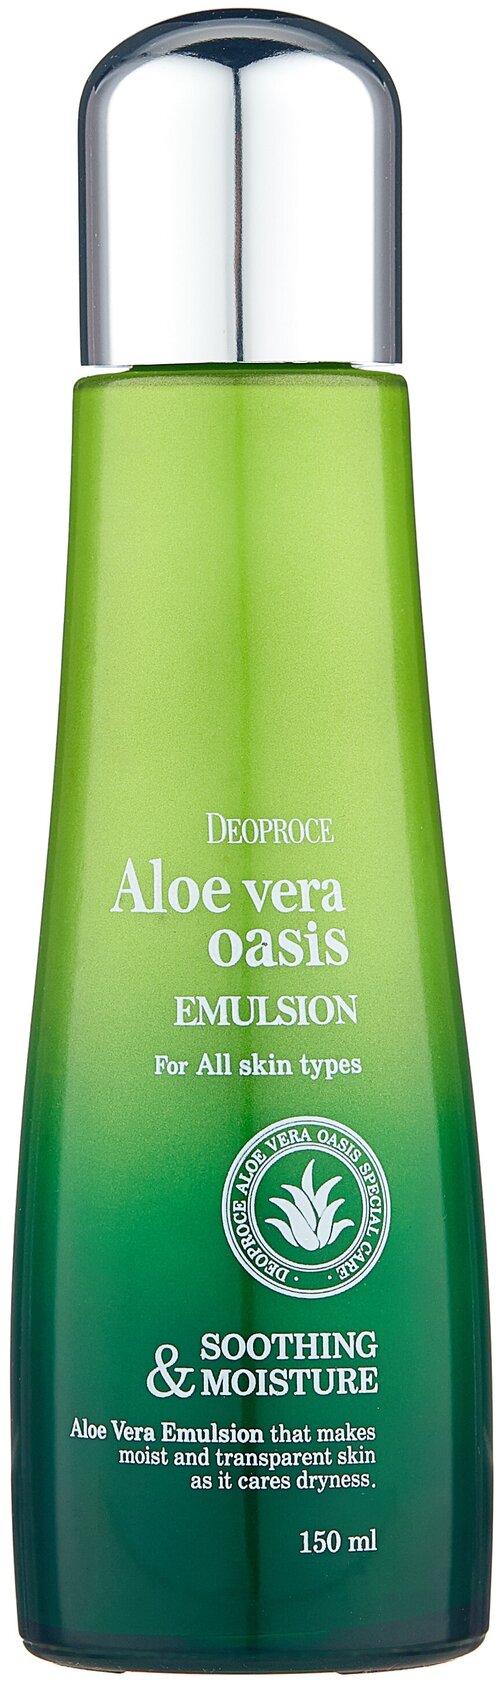 Deoproce Aloe Vera Oasis Emulsion Увлажняющая эмульсия для лица Алое вера, 150 мл